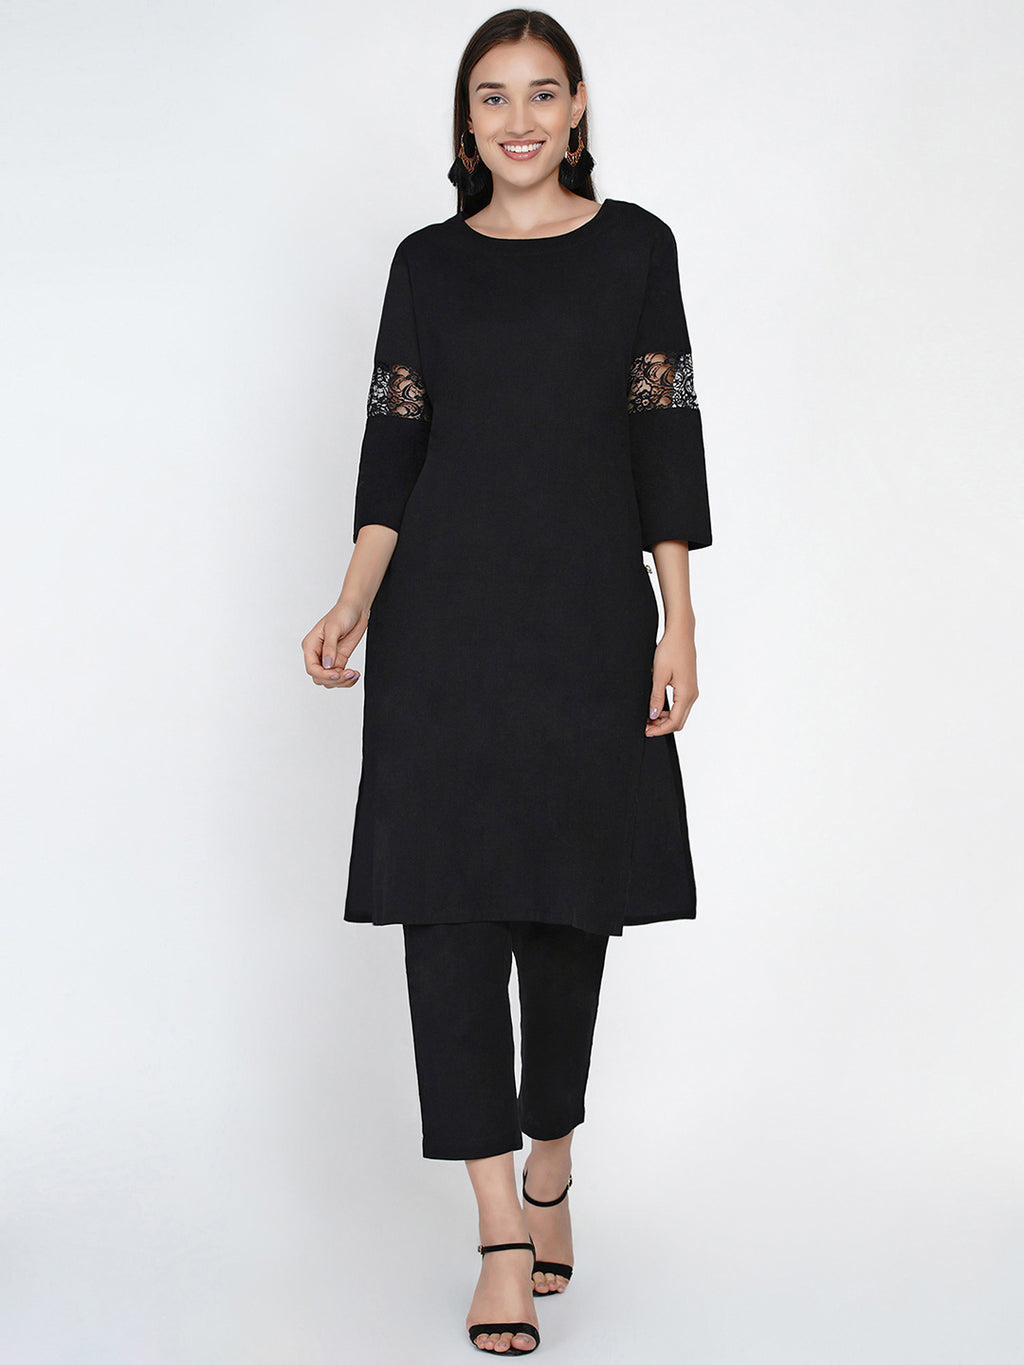 Black cotton flex with lace inserts at sleeve Straight kurta ONLY-Kurta-Fabnest